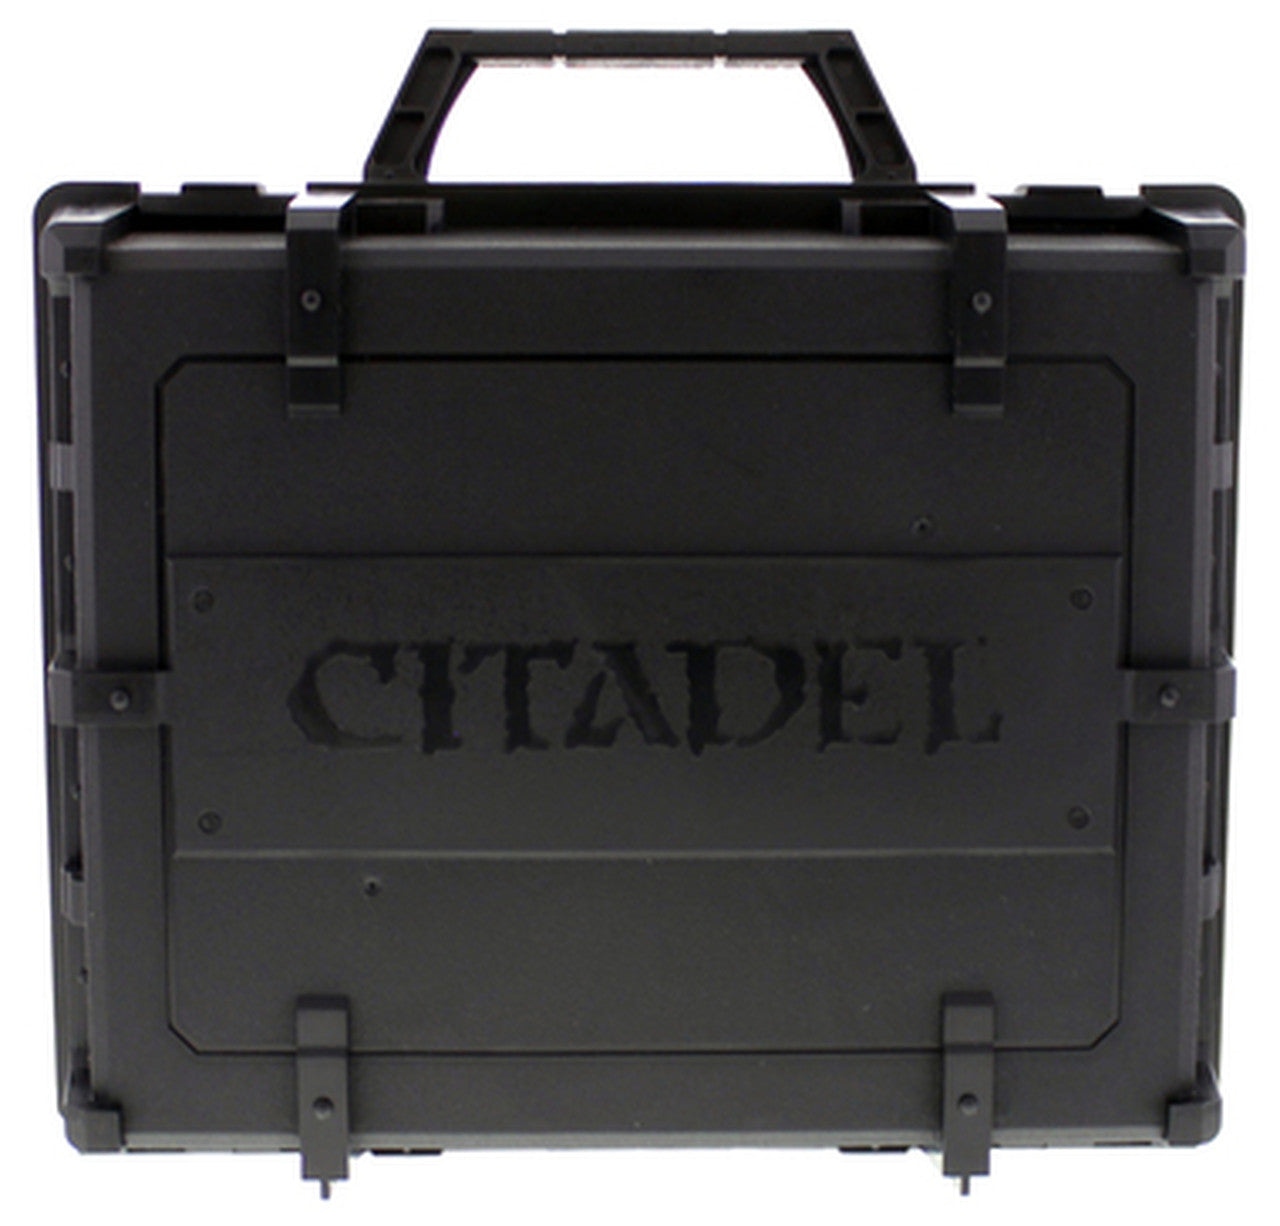 Citadel Tools: Skirmish Figure Case